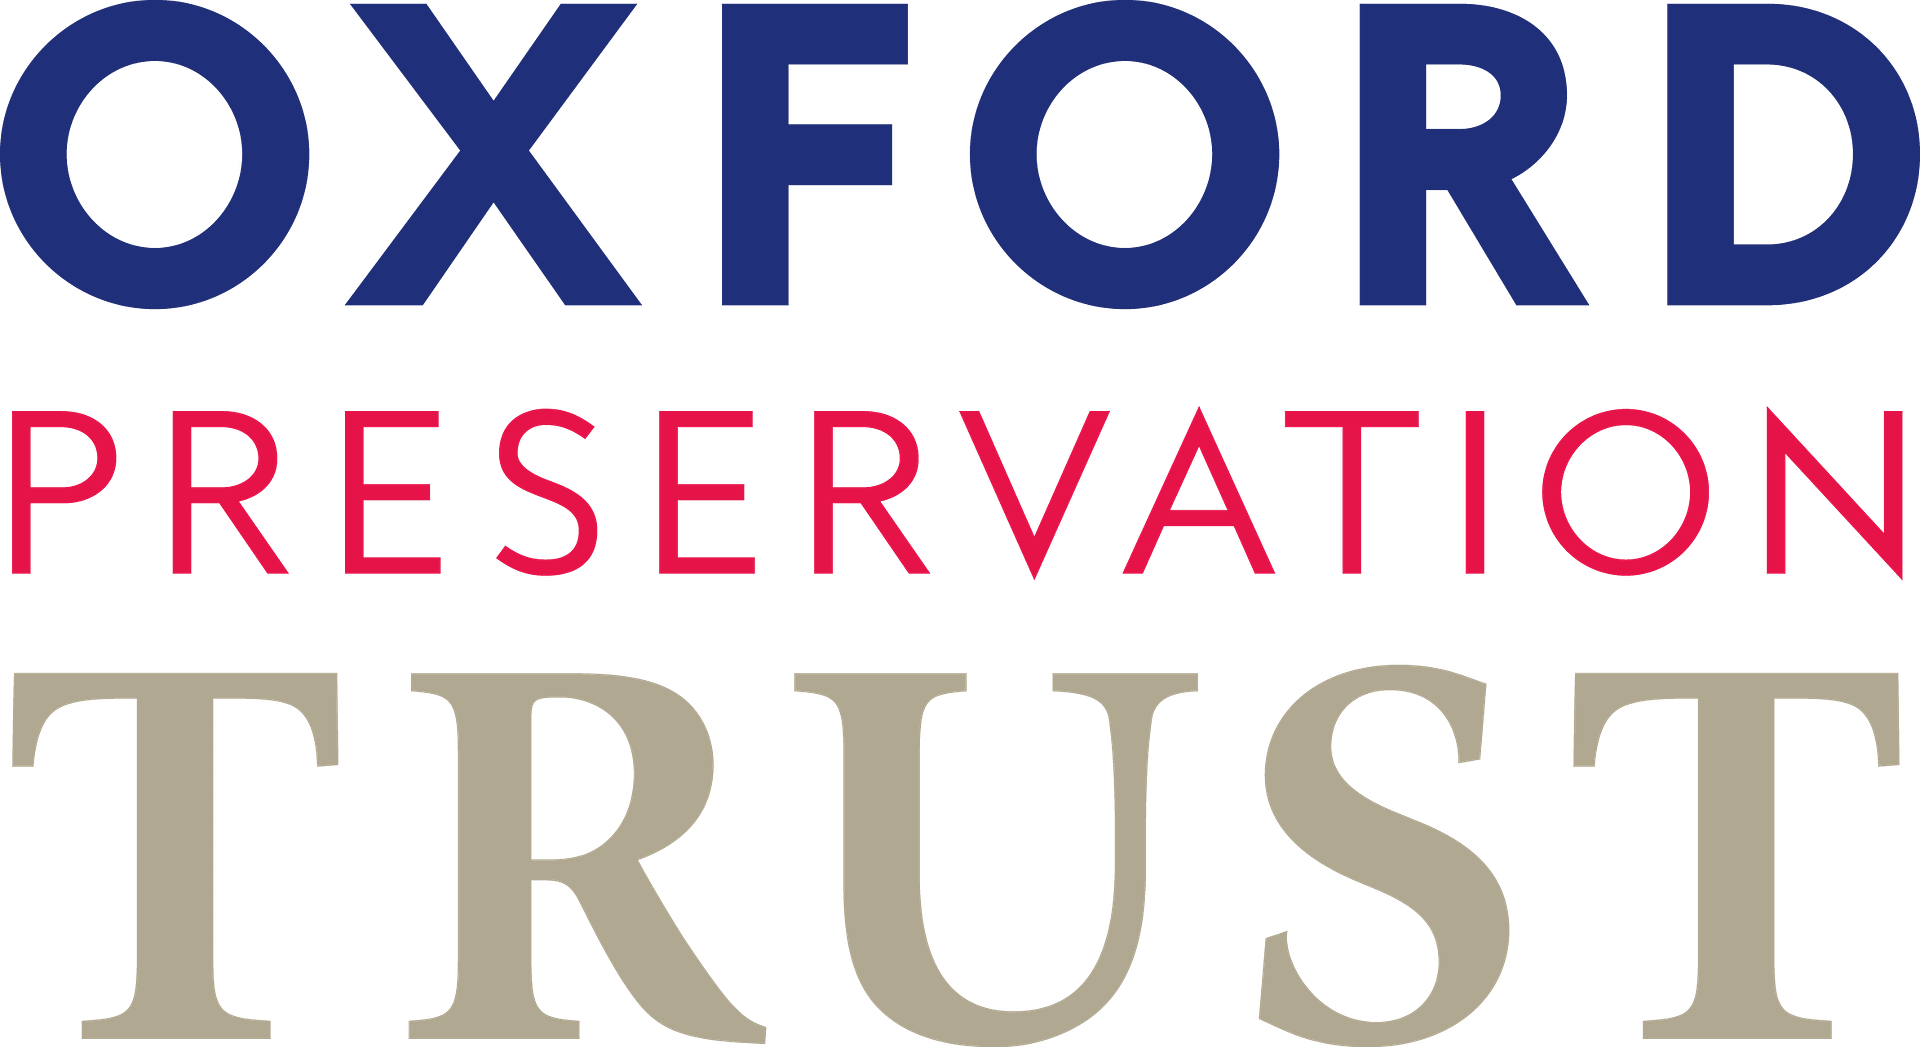 oxford-preservation-trust